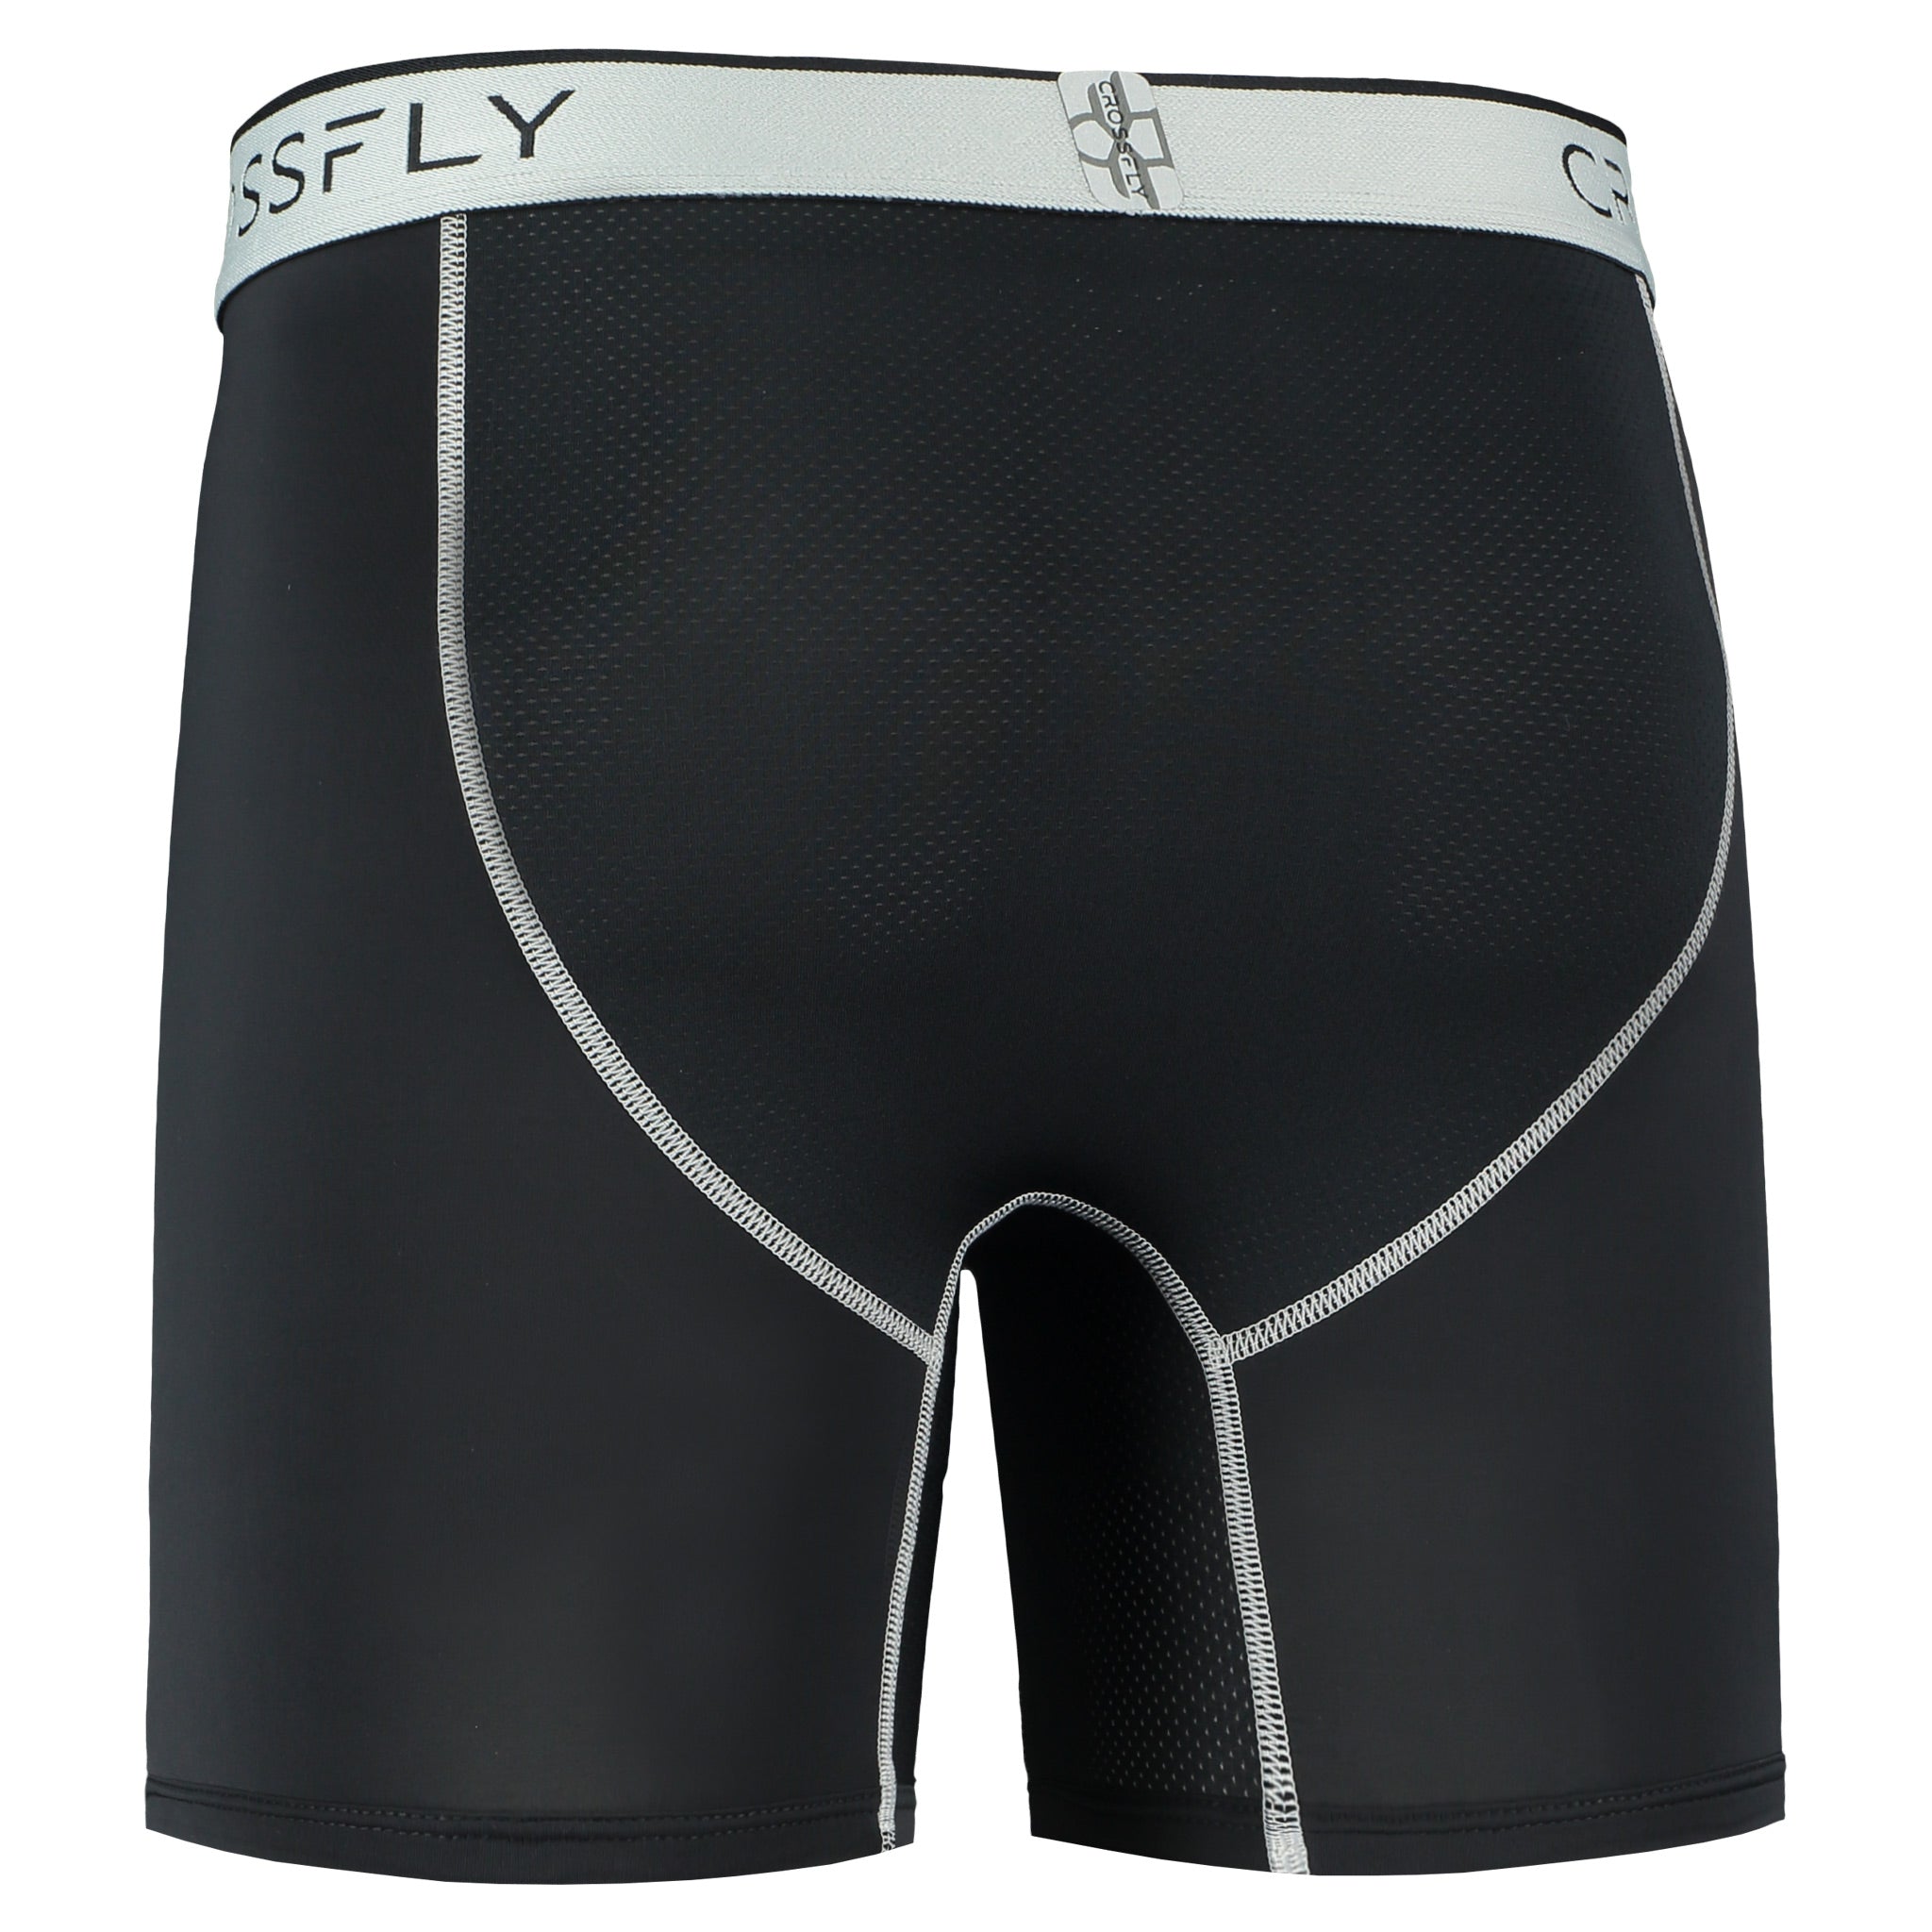 Crossfly IKON X Men's Underwear 3 Trunk Boxer Briefs, 24 Hour